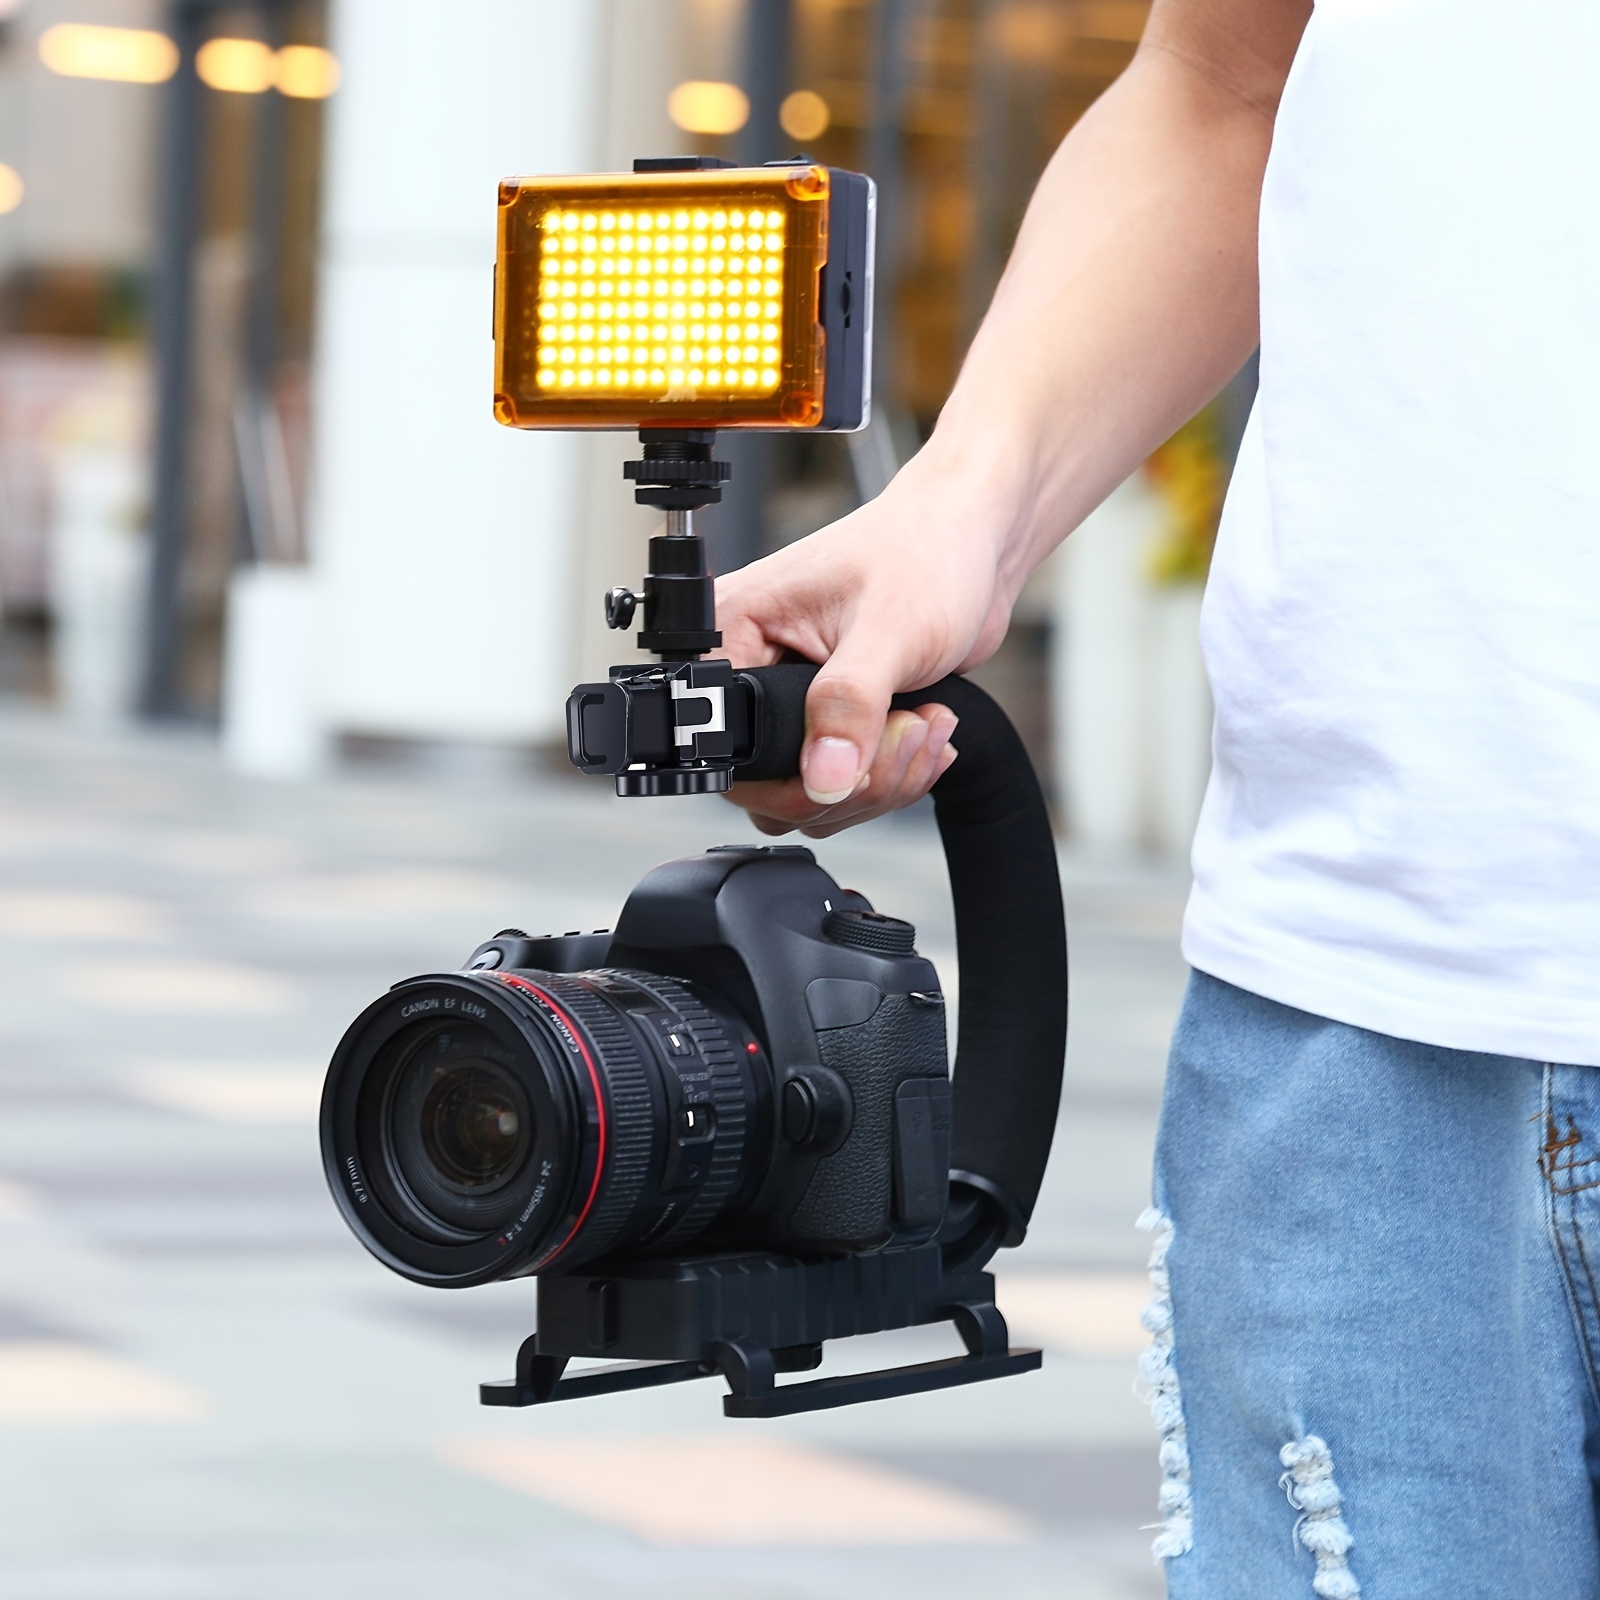 Estabilizador de cámara de video portátil, soporte portátil en forma de U  con micrófono de luz LED, evita temblores al disparar, para cámara SLR